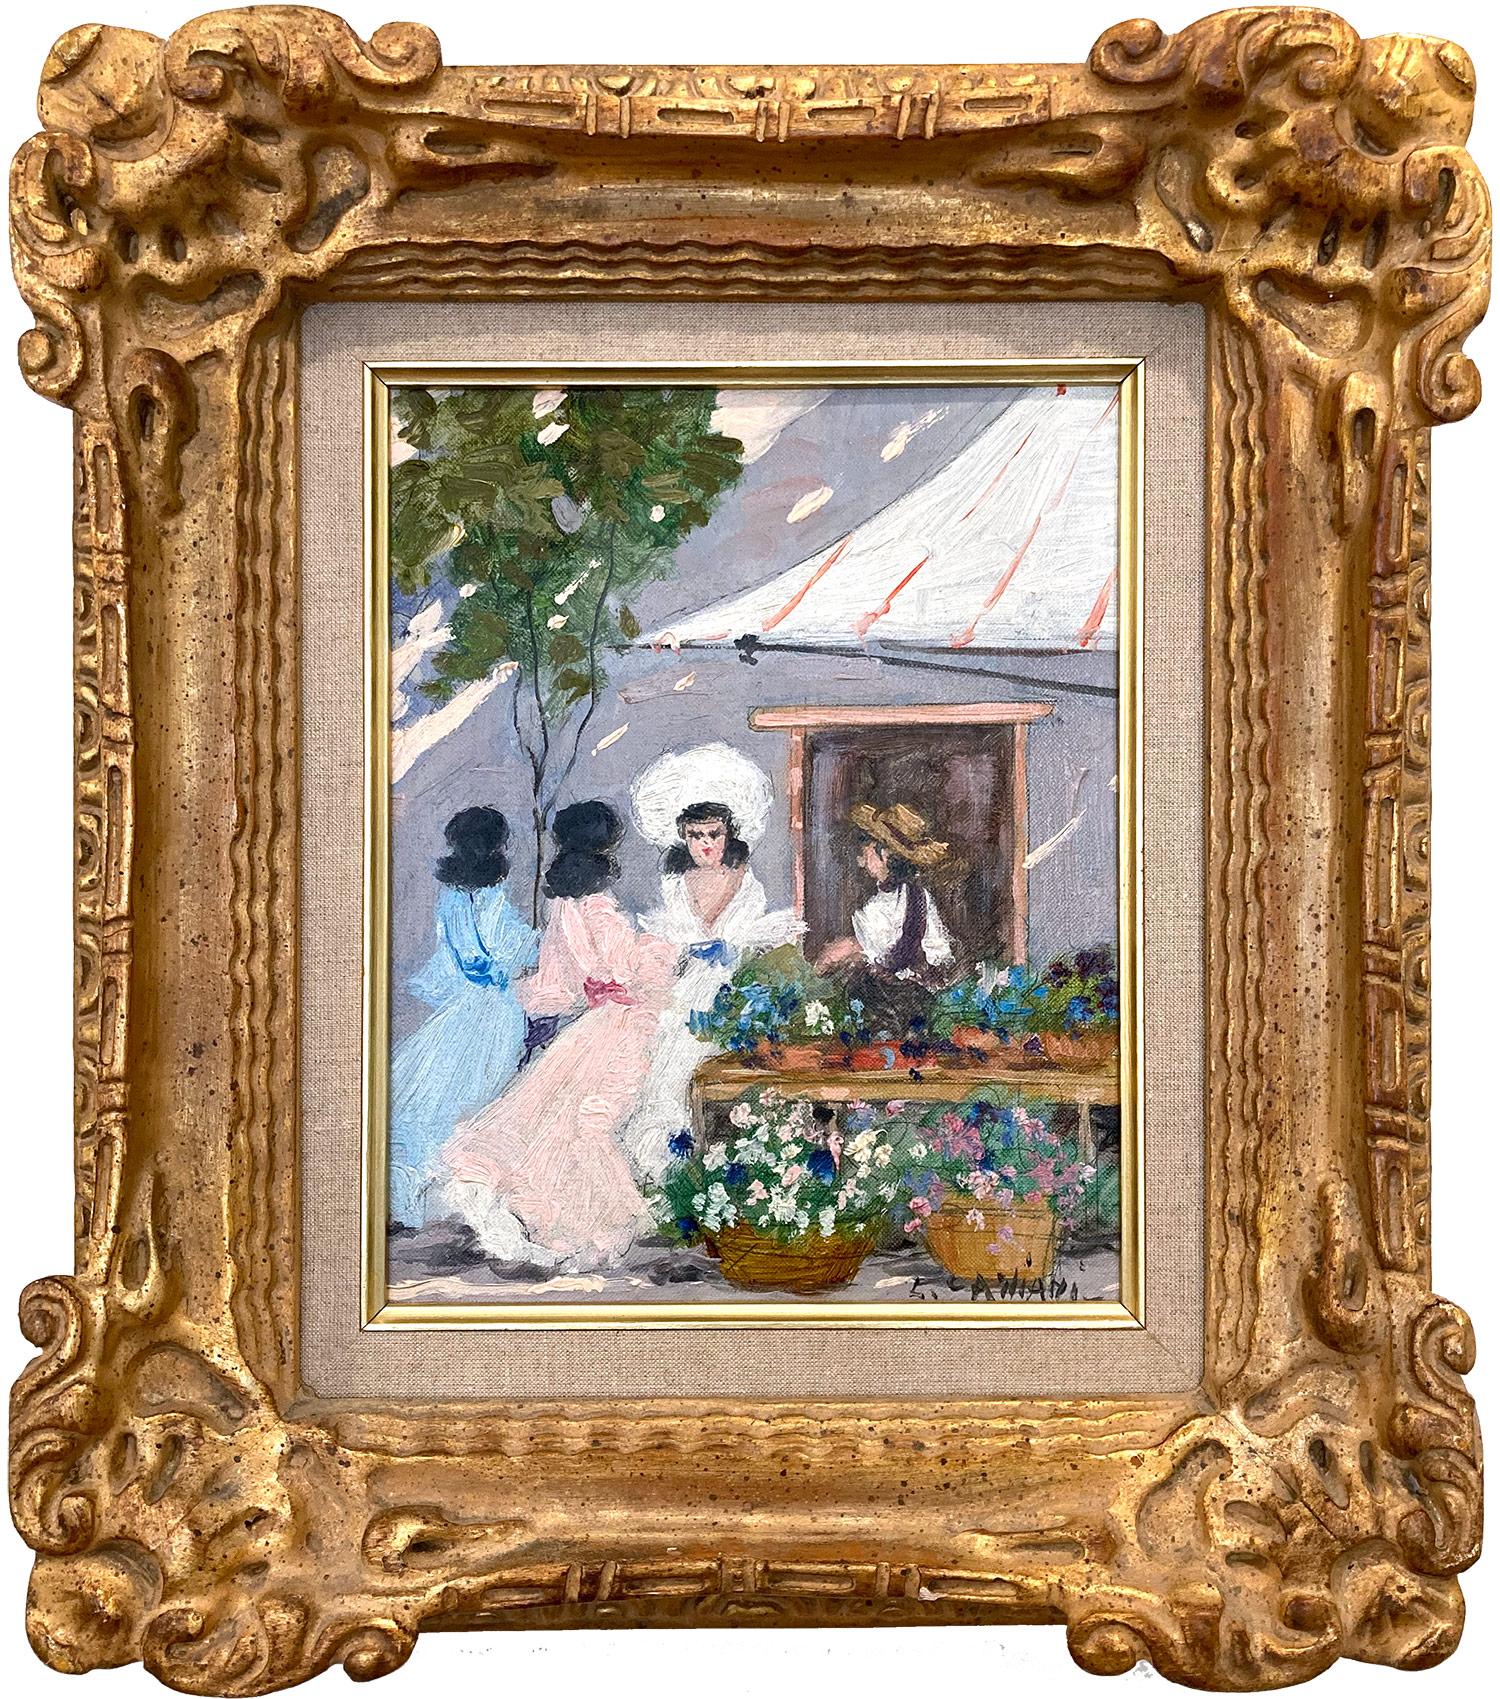 Luigi Cagliani Landscape Painting - "Parisian Flower Market with Figures" Impressionist Scene Oil on Canvas Painting